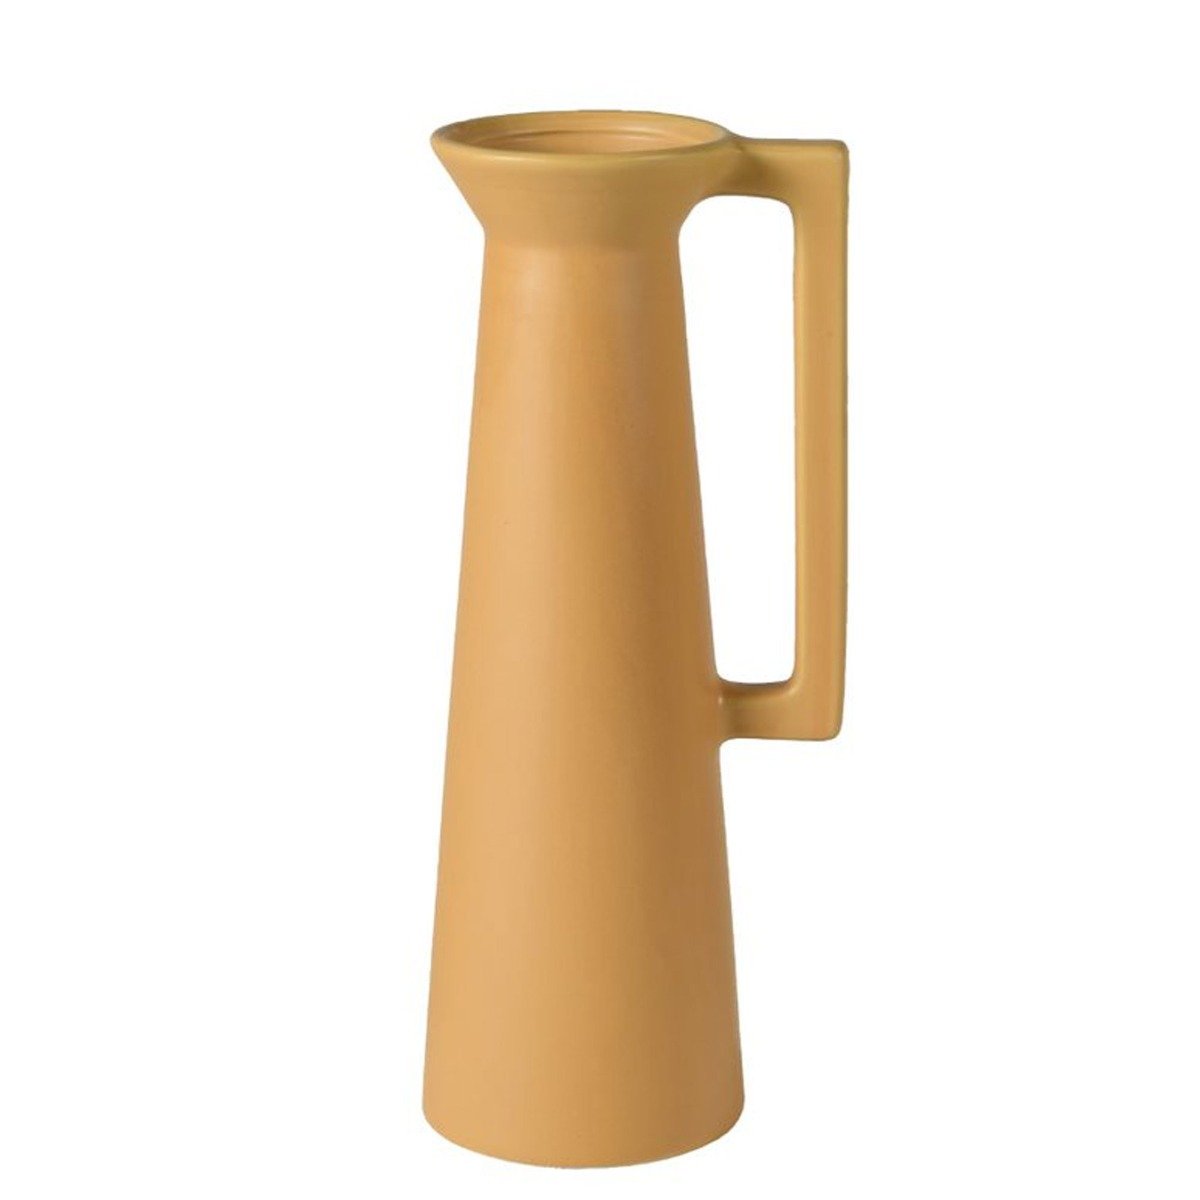 Mustard Vase, Yellow Ceramic | Barker & Stonehouse